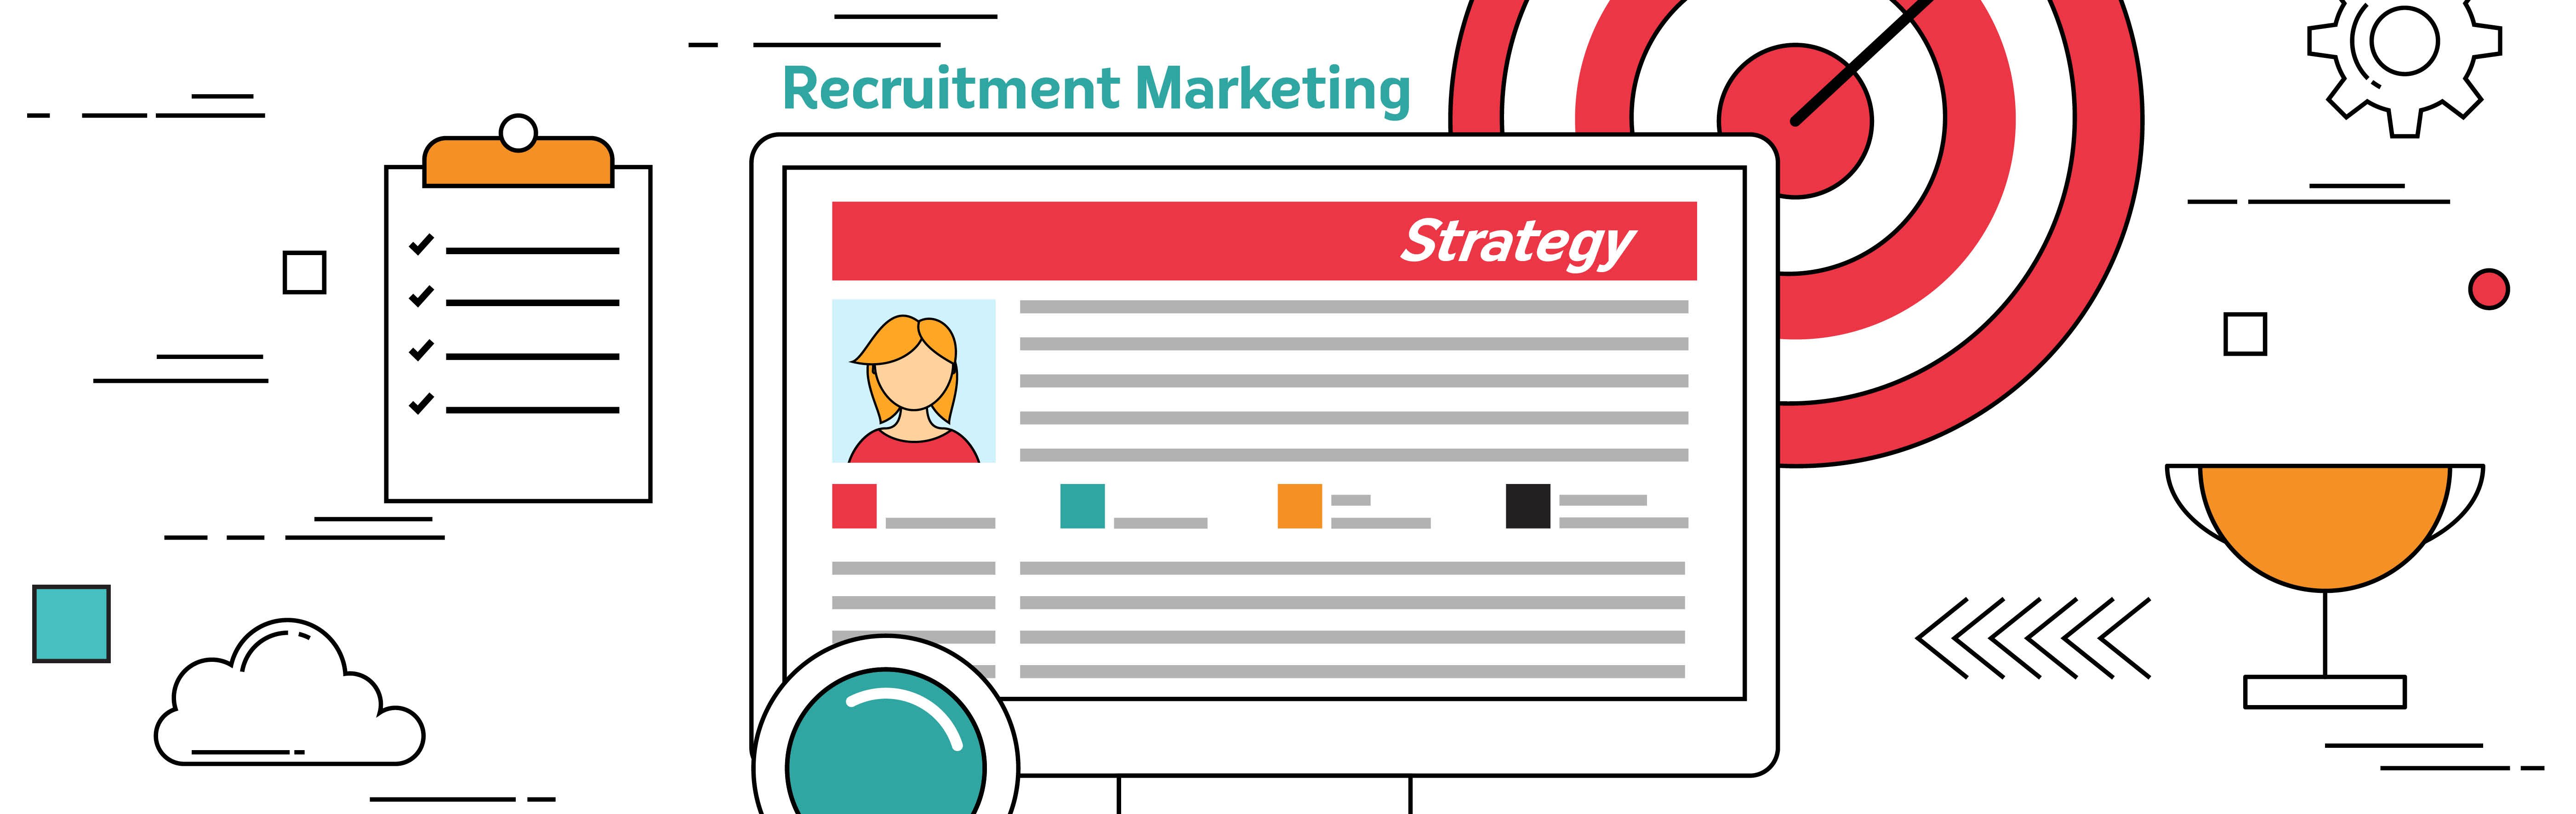 recruitment-marketing-strategy